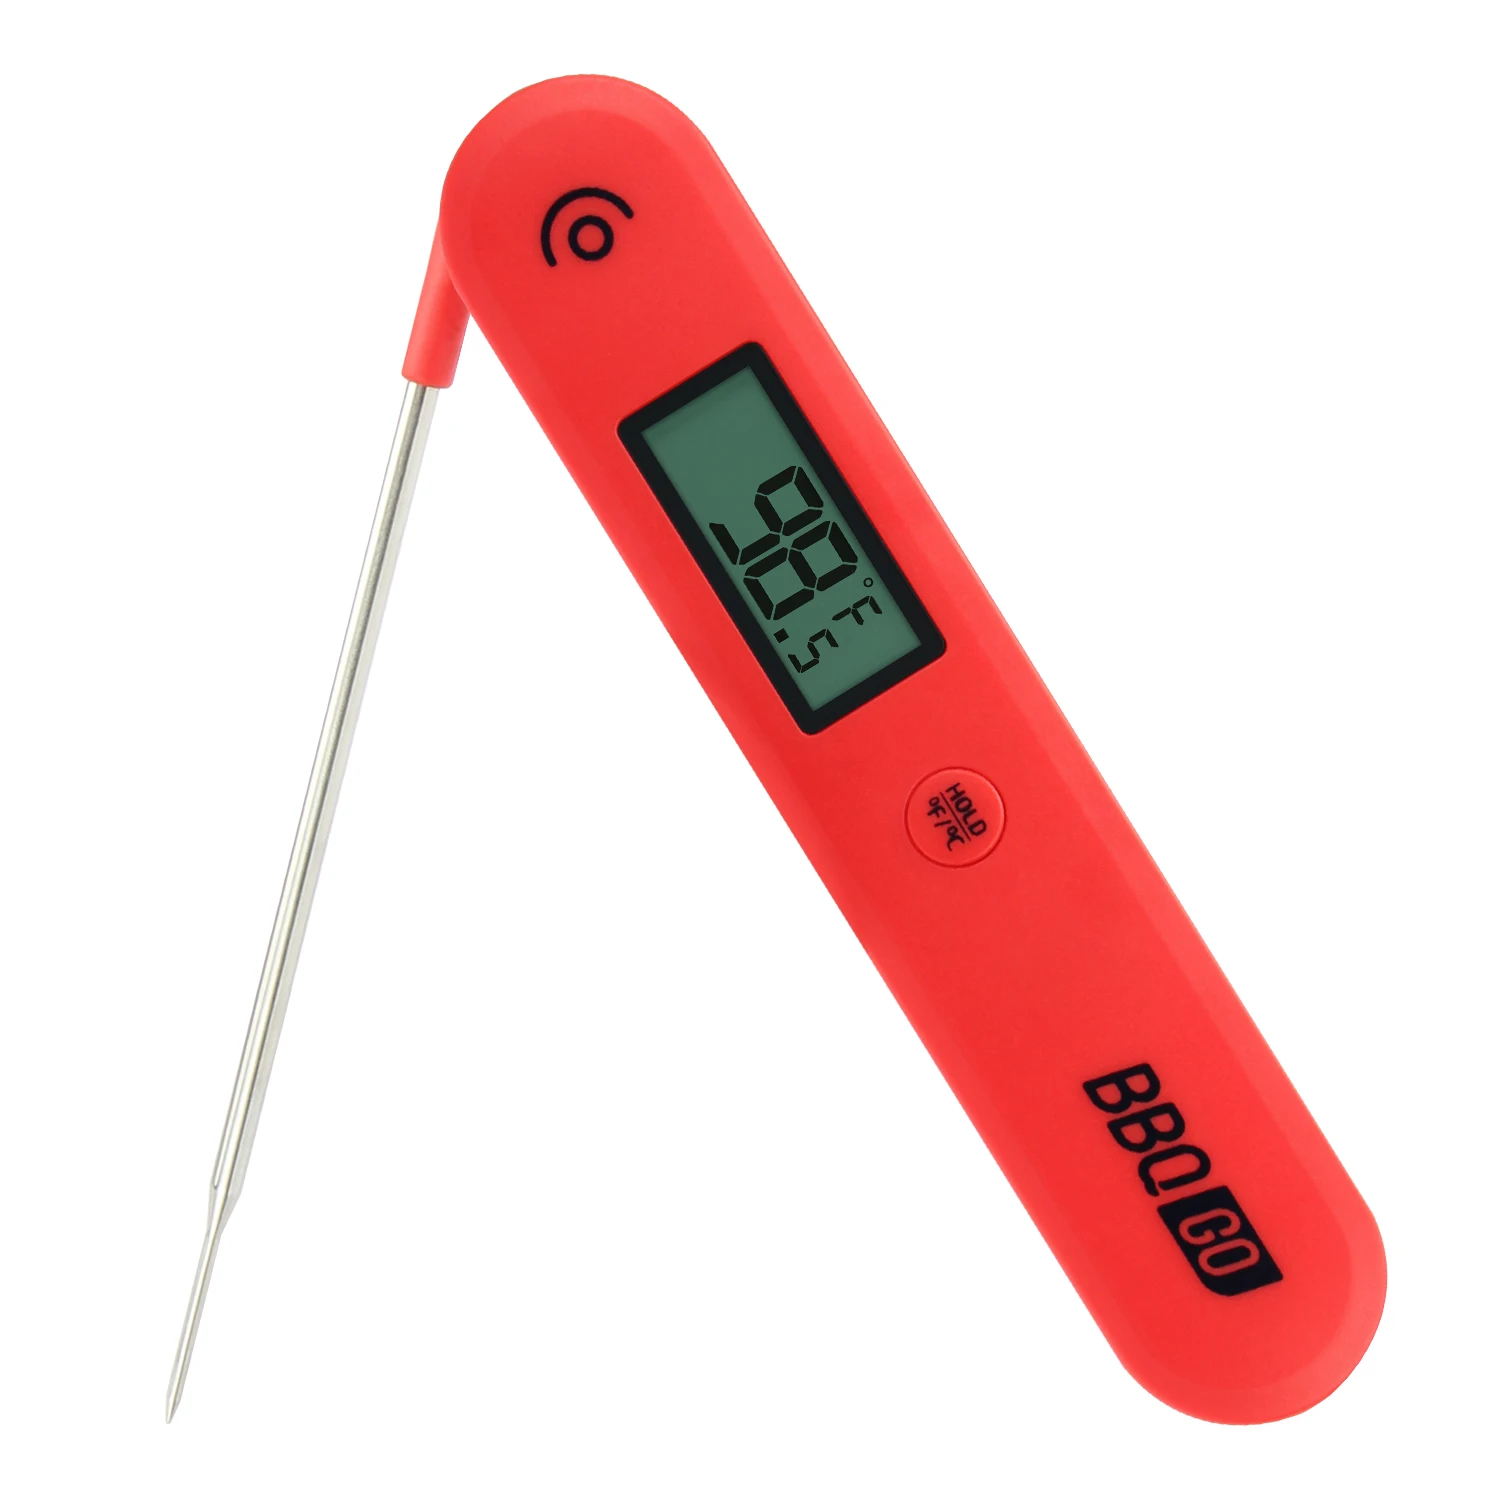 IHT-1P Digital Thermometer